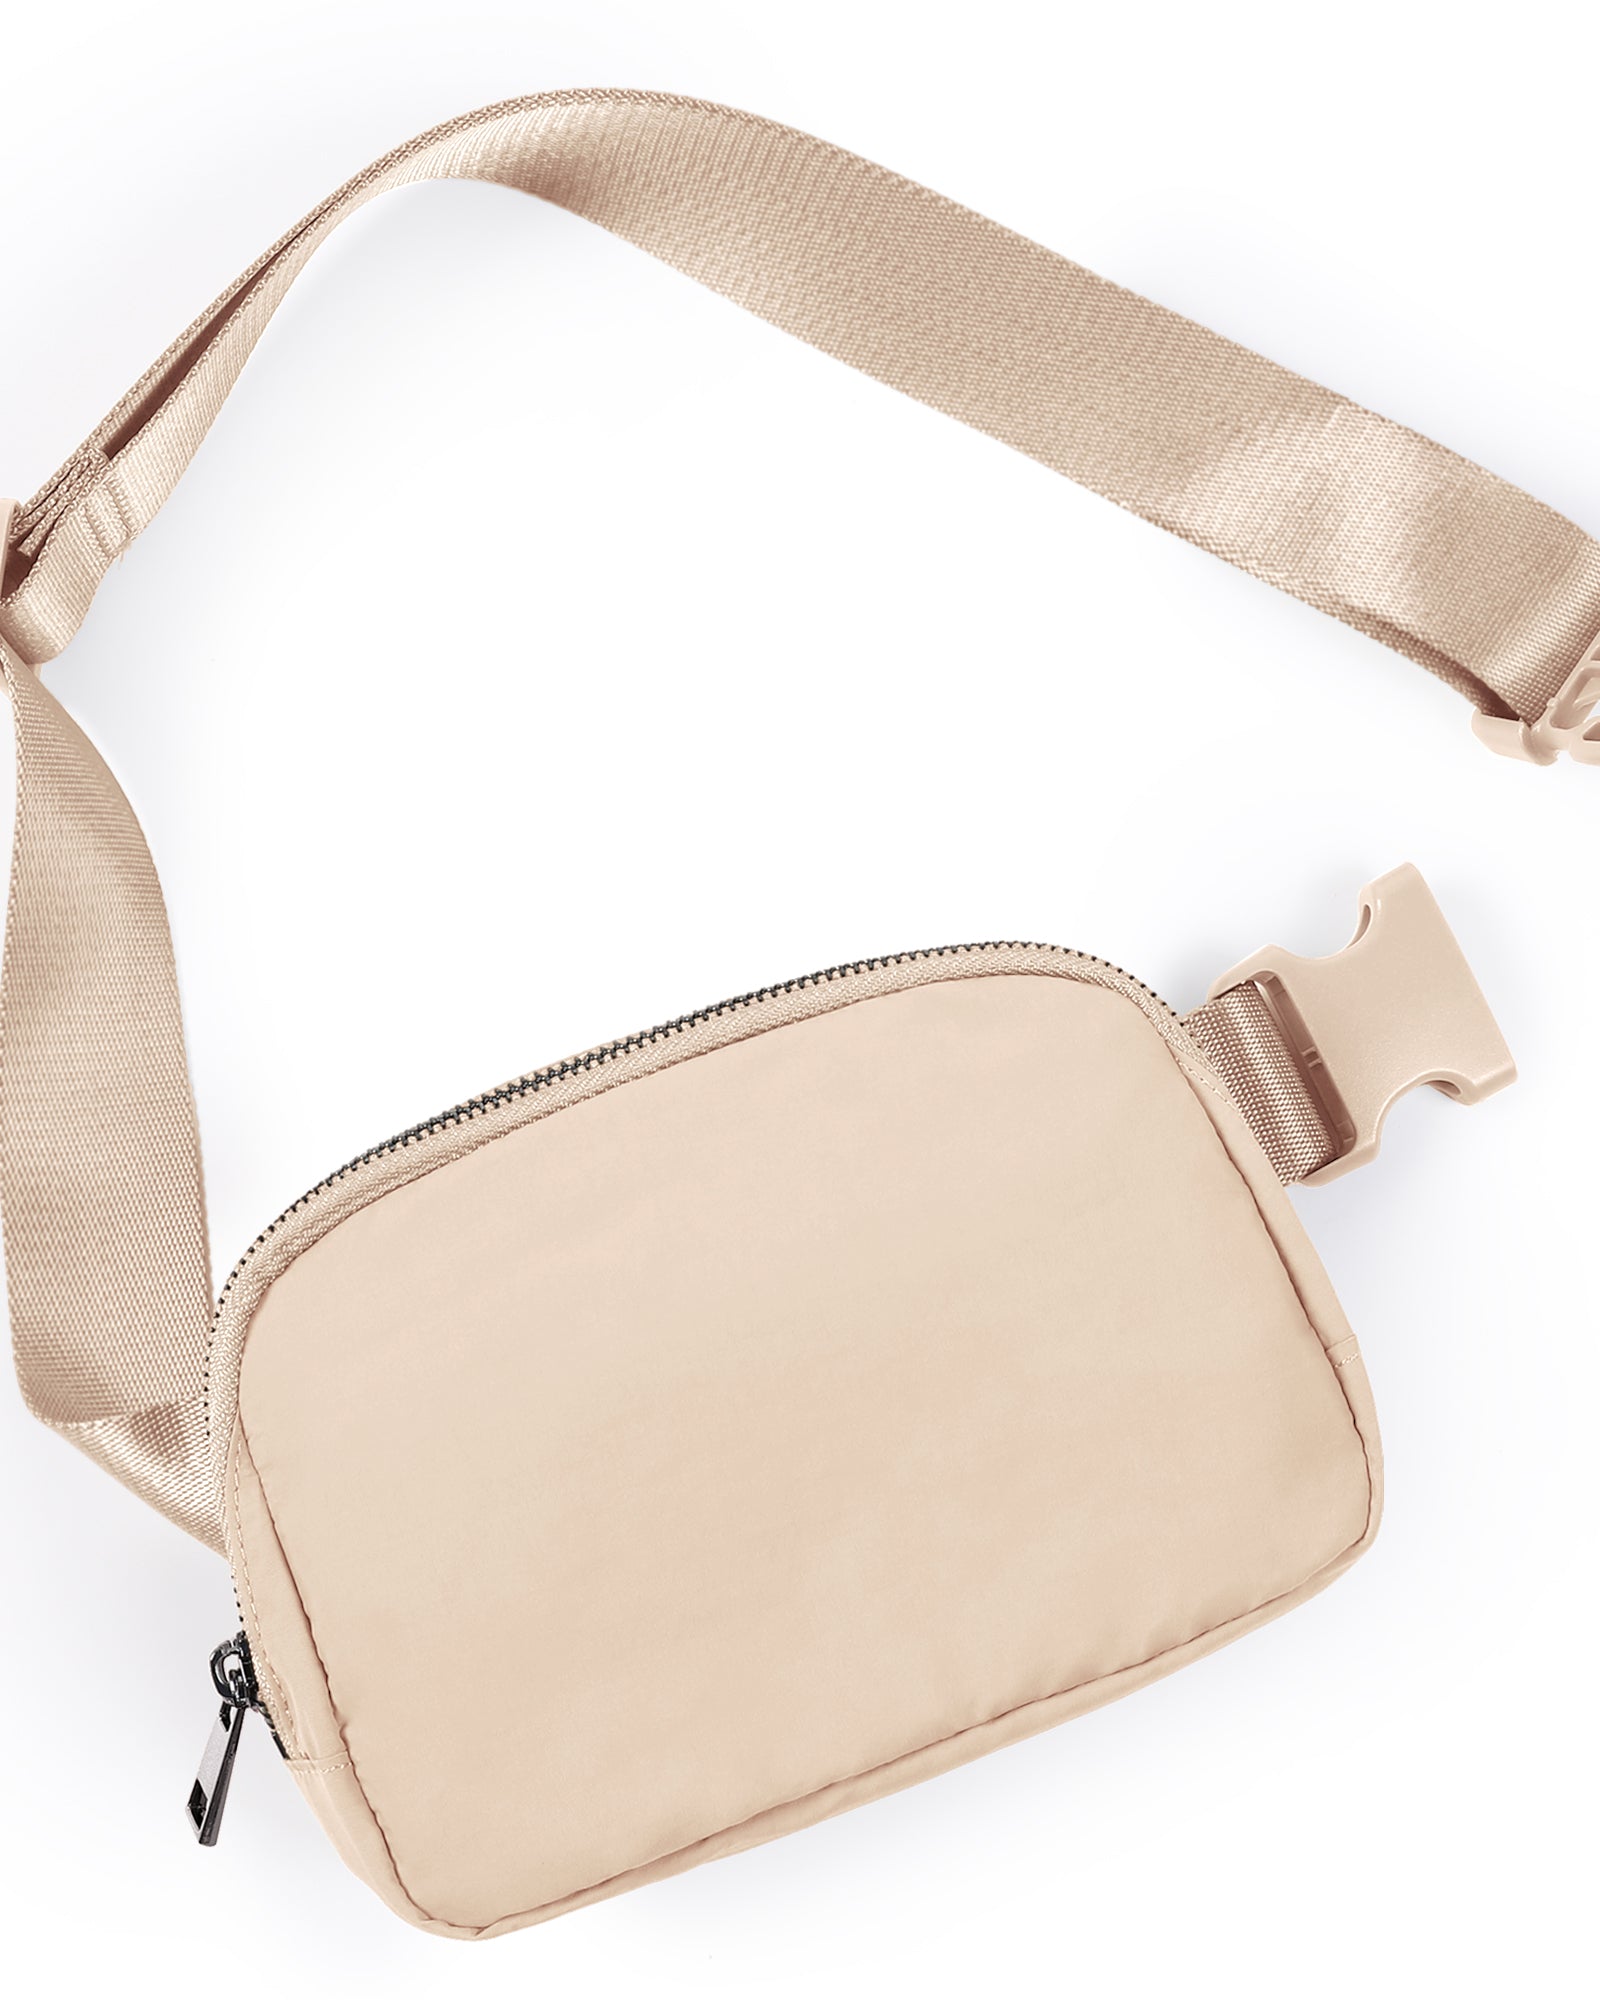 Unisex Mini Belt Bag Lrish Cream 8" x 2" x 5.5" - ododos